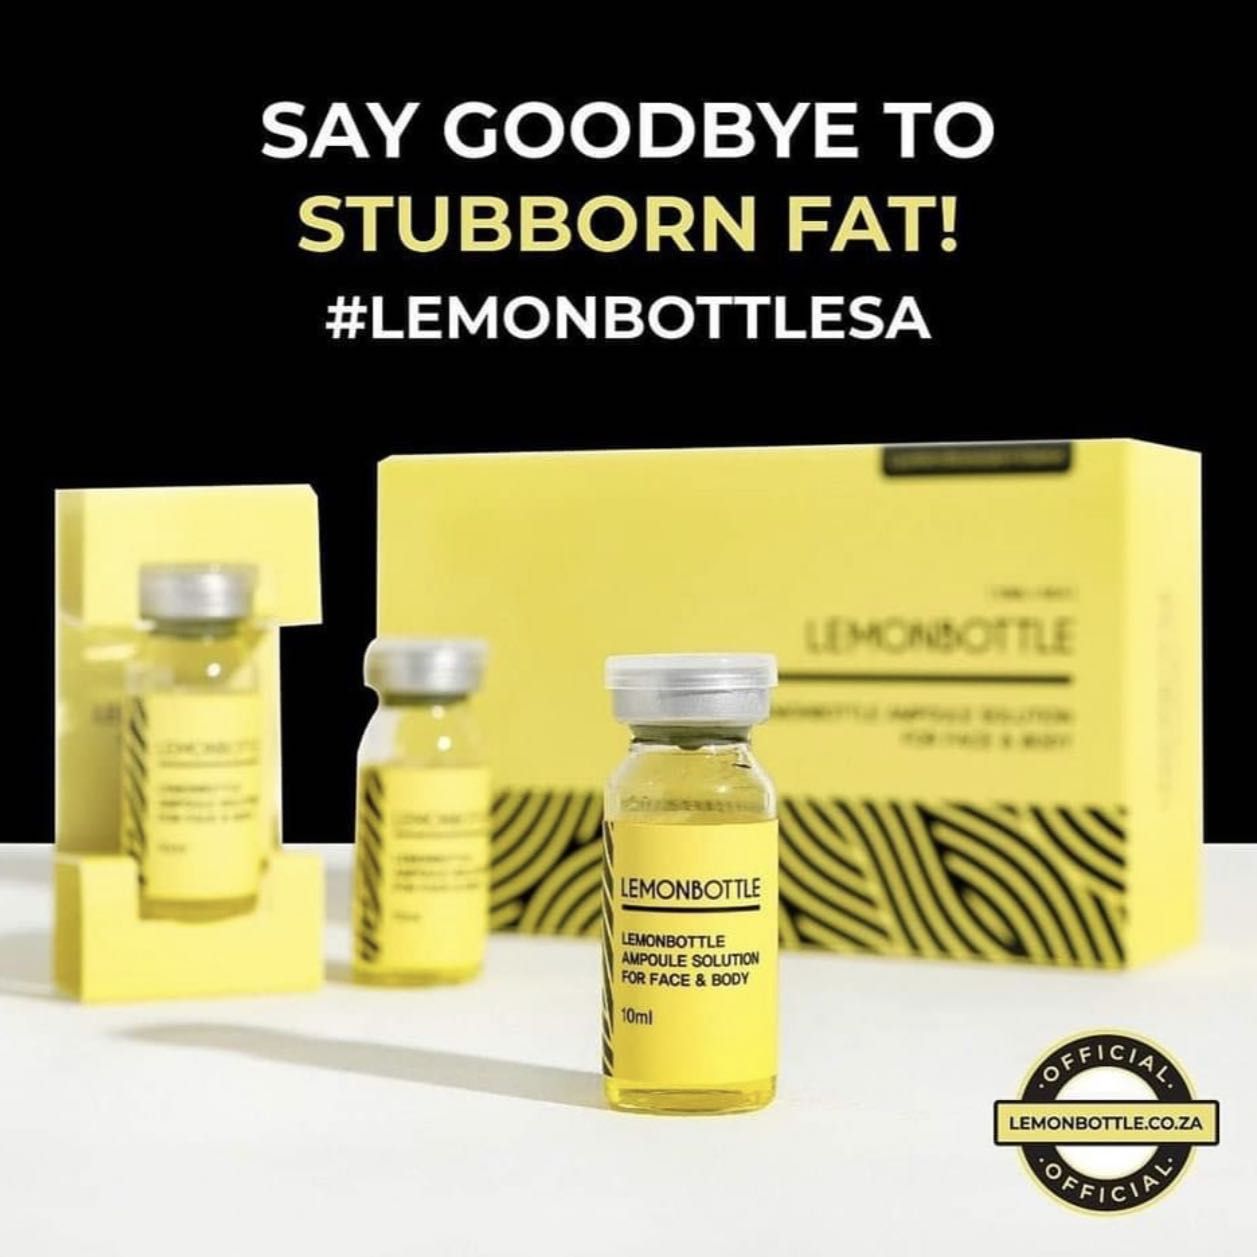 🍋 Lemon Bottle Fat dissolving injections ABDOMEN portfolio